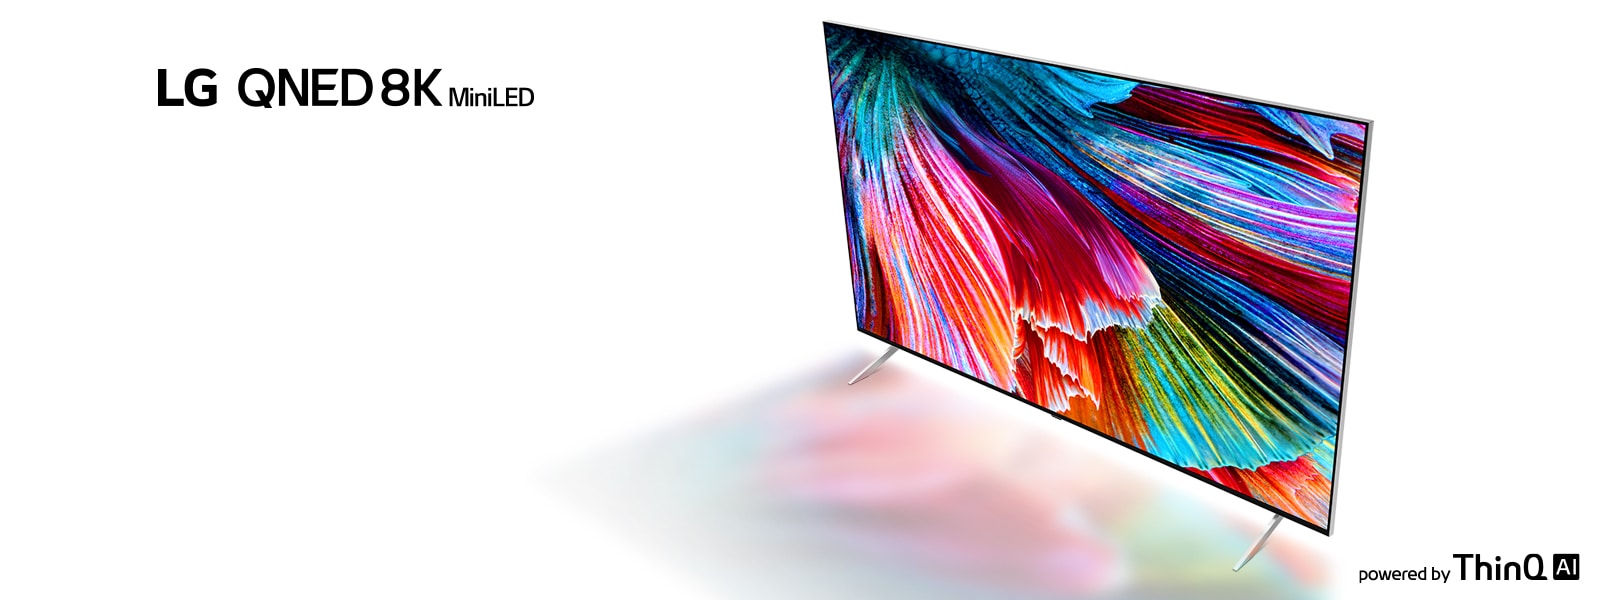 Изображение телевизора LG QNED 8K MiniLED на белом фоне и разноцветное отражение экрана на полу.